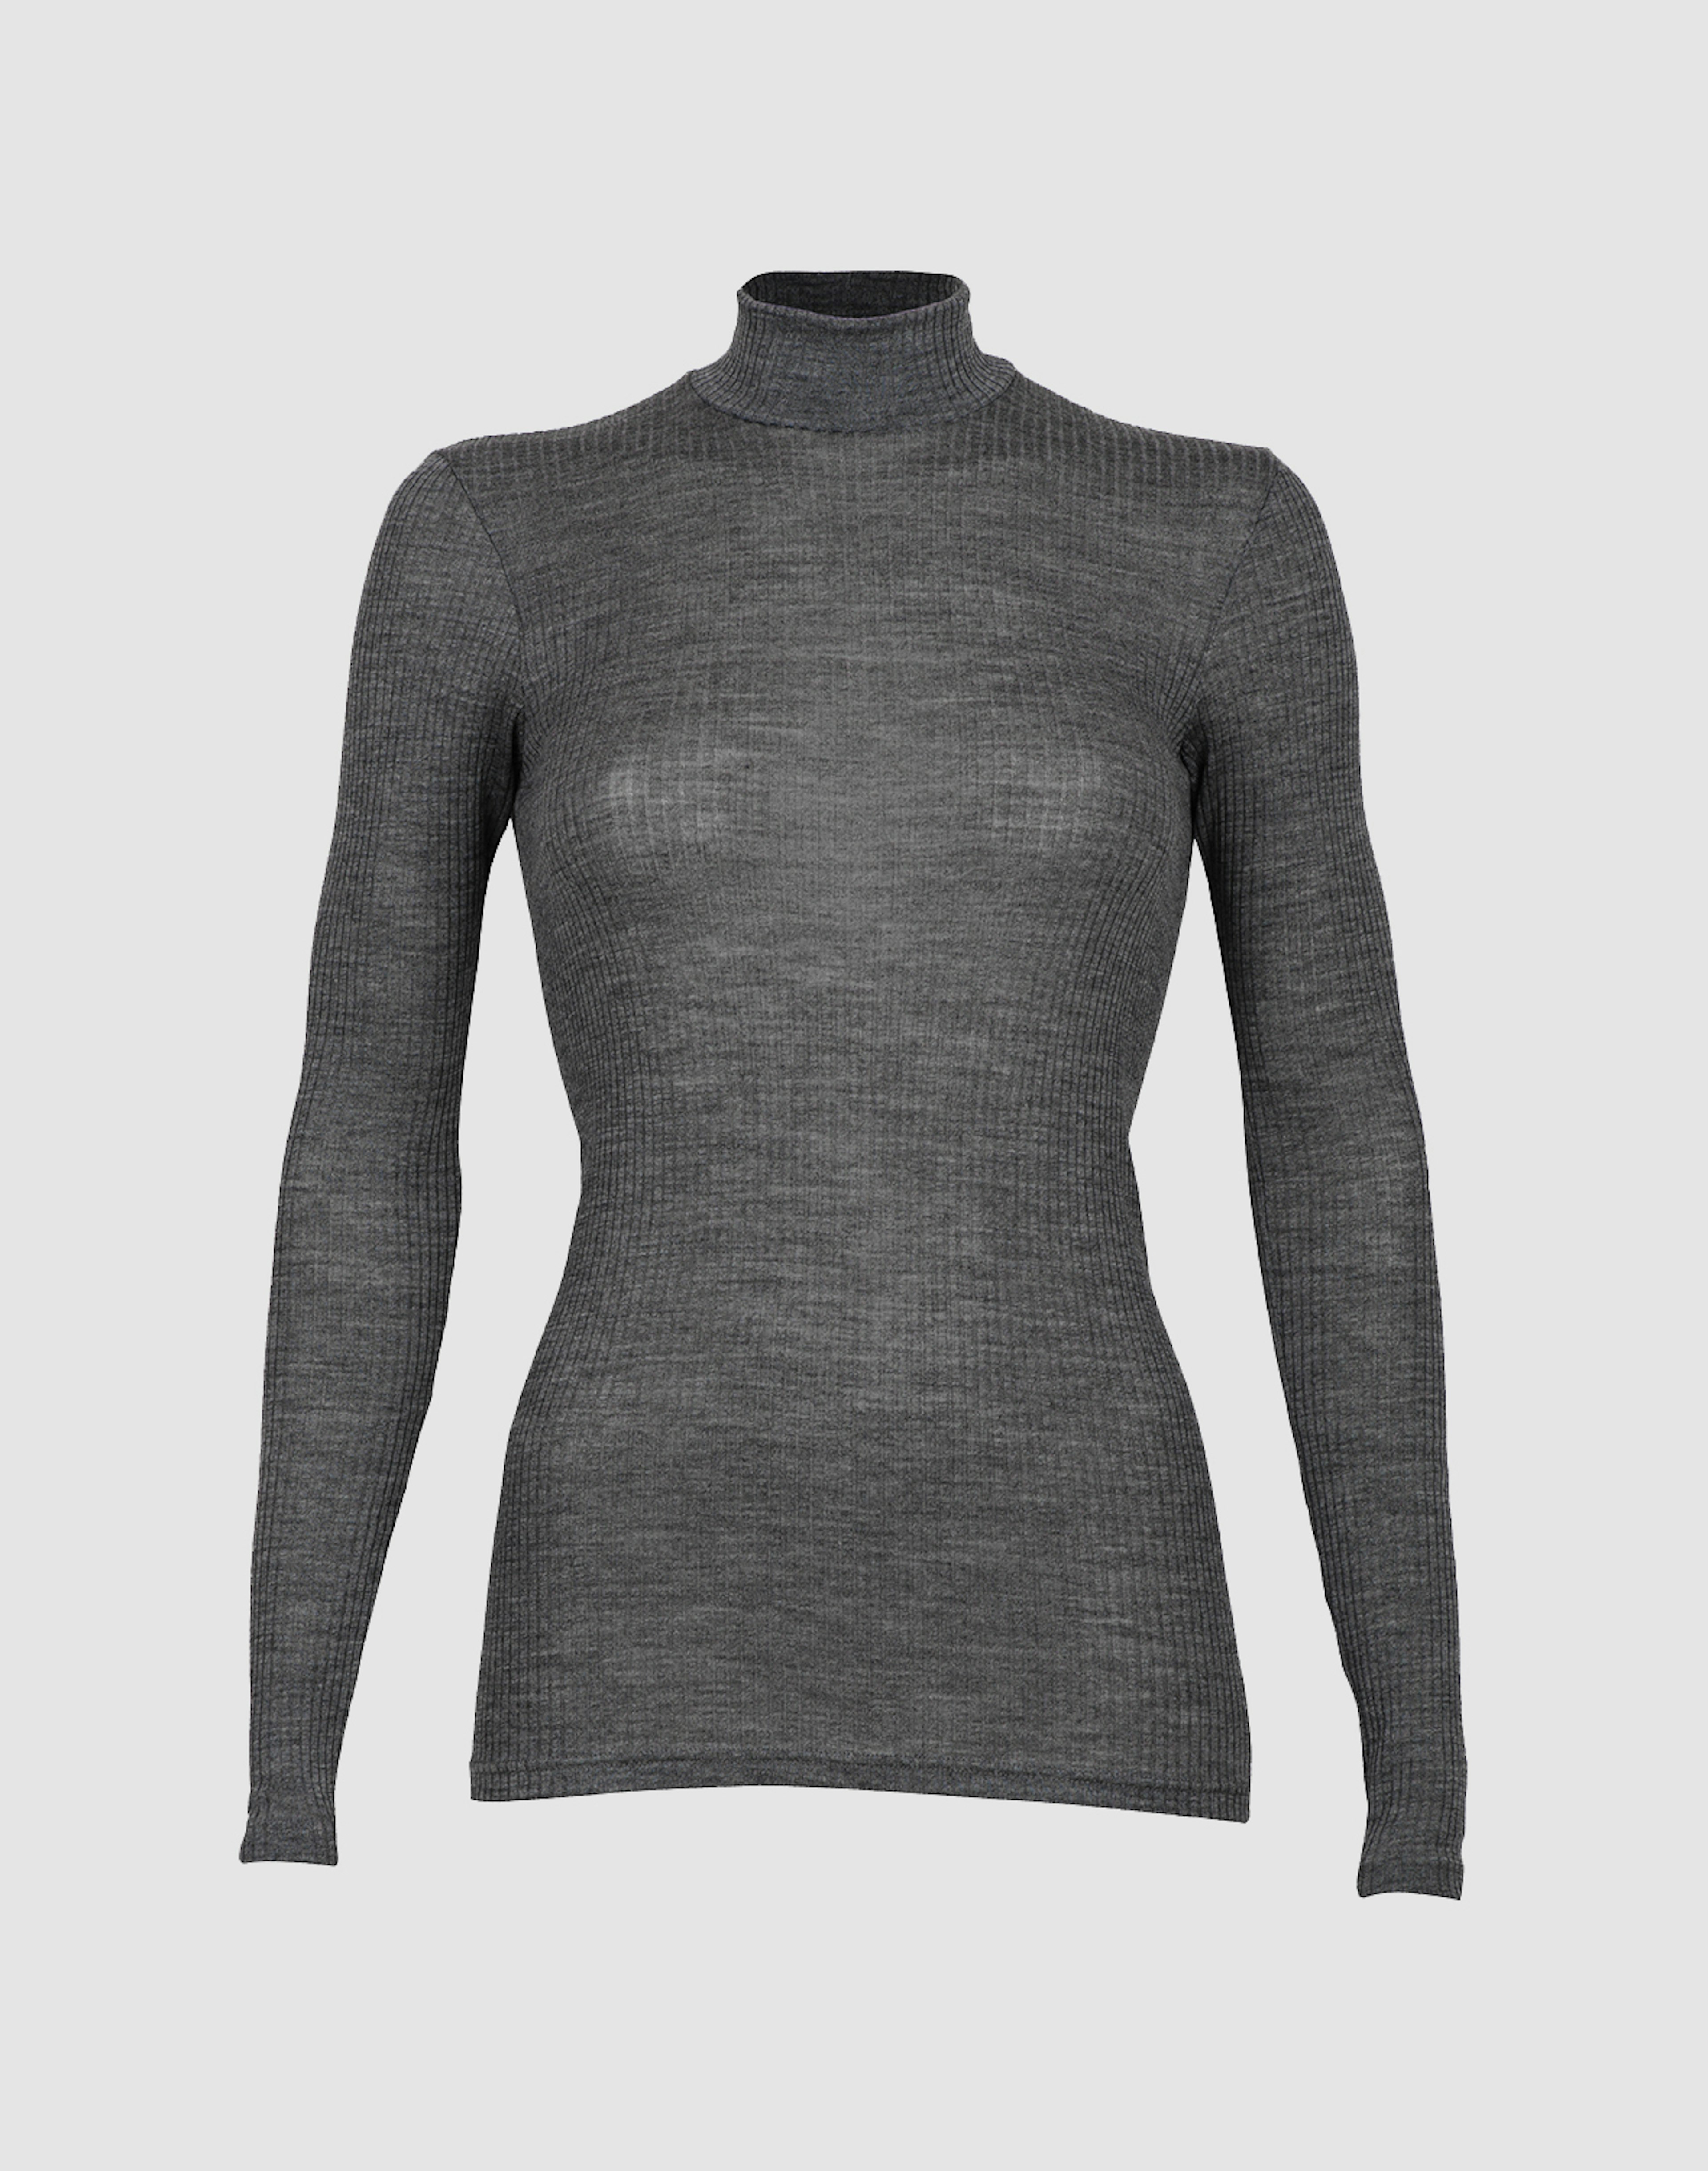 Women's merino wool high neck top Dark grey melange